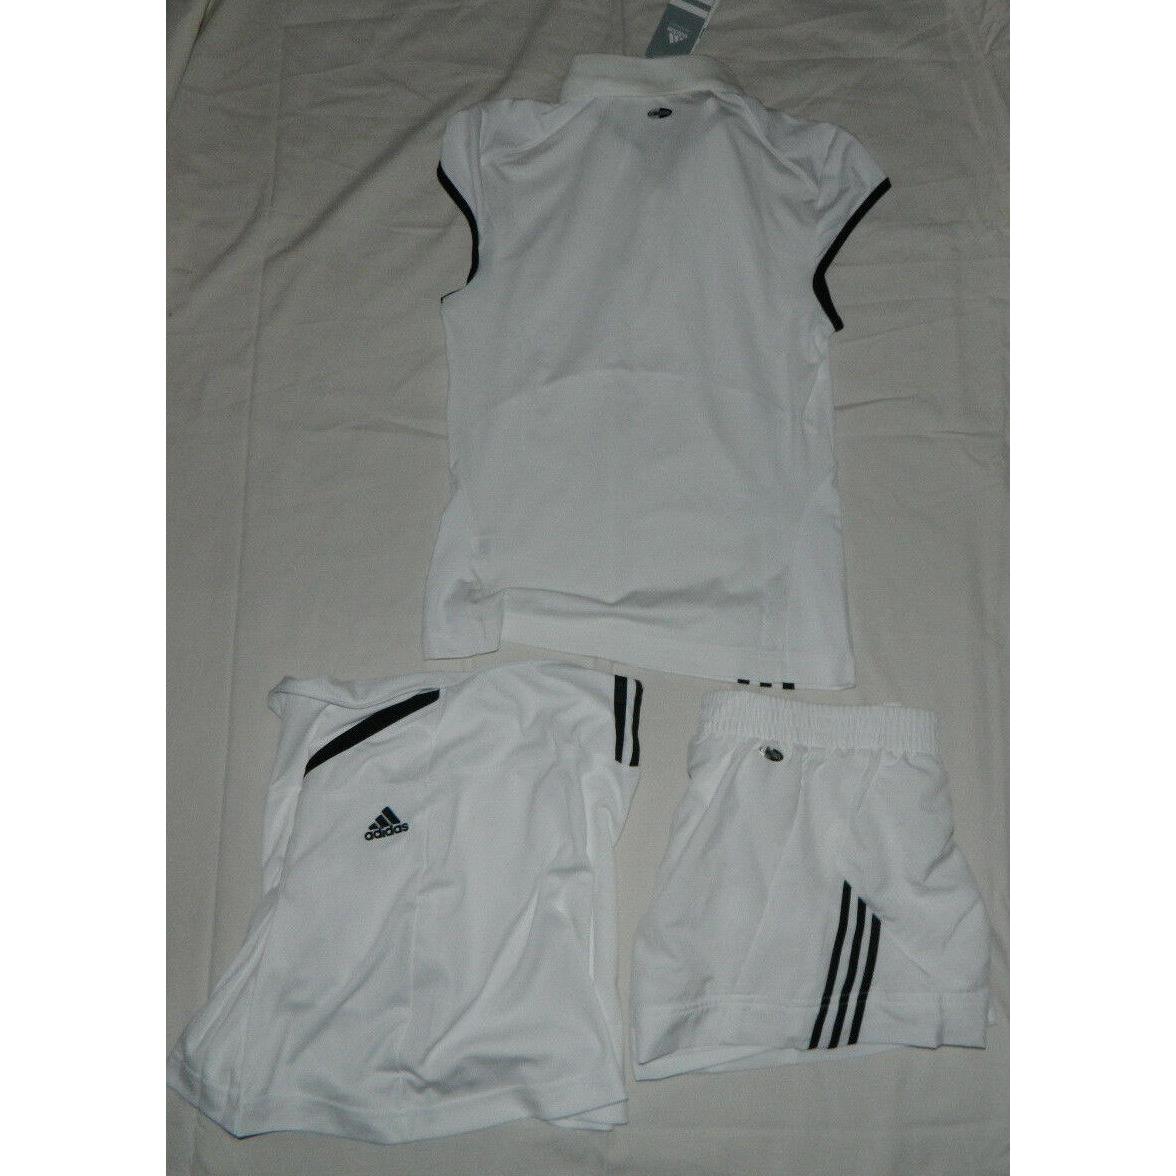 Women Adidas Solid Black White Tennis Set Skirt Shirt Short Size S